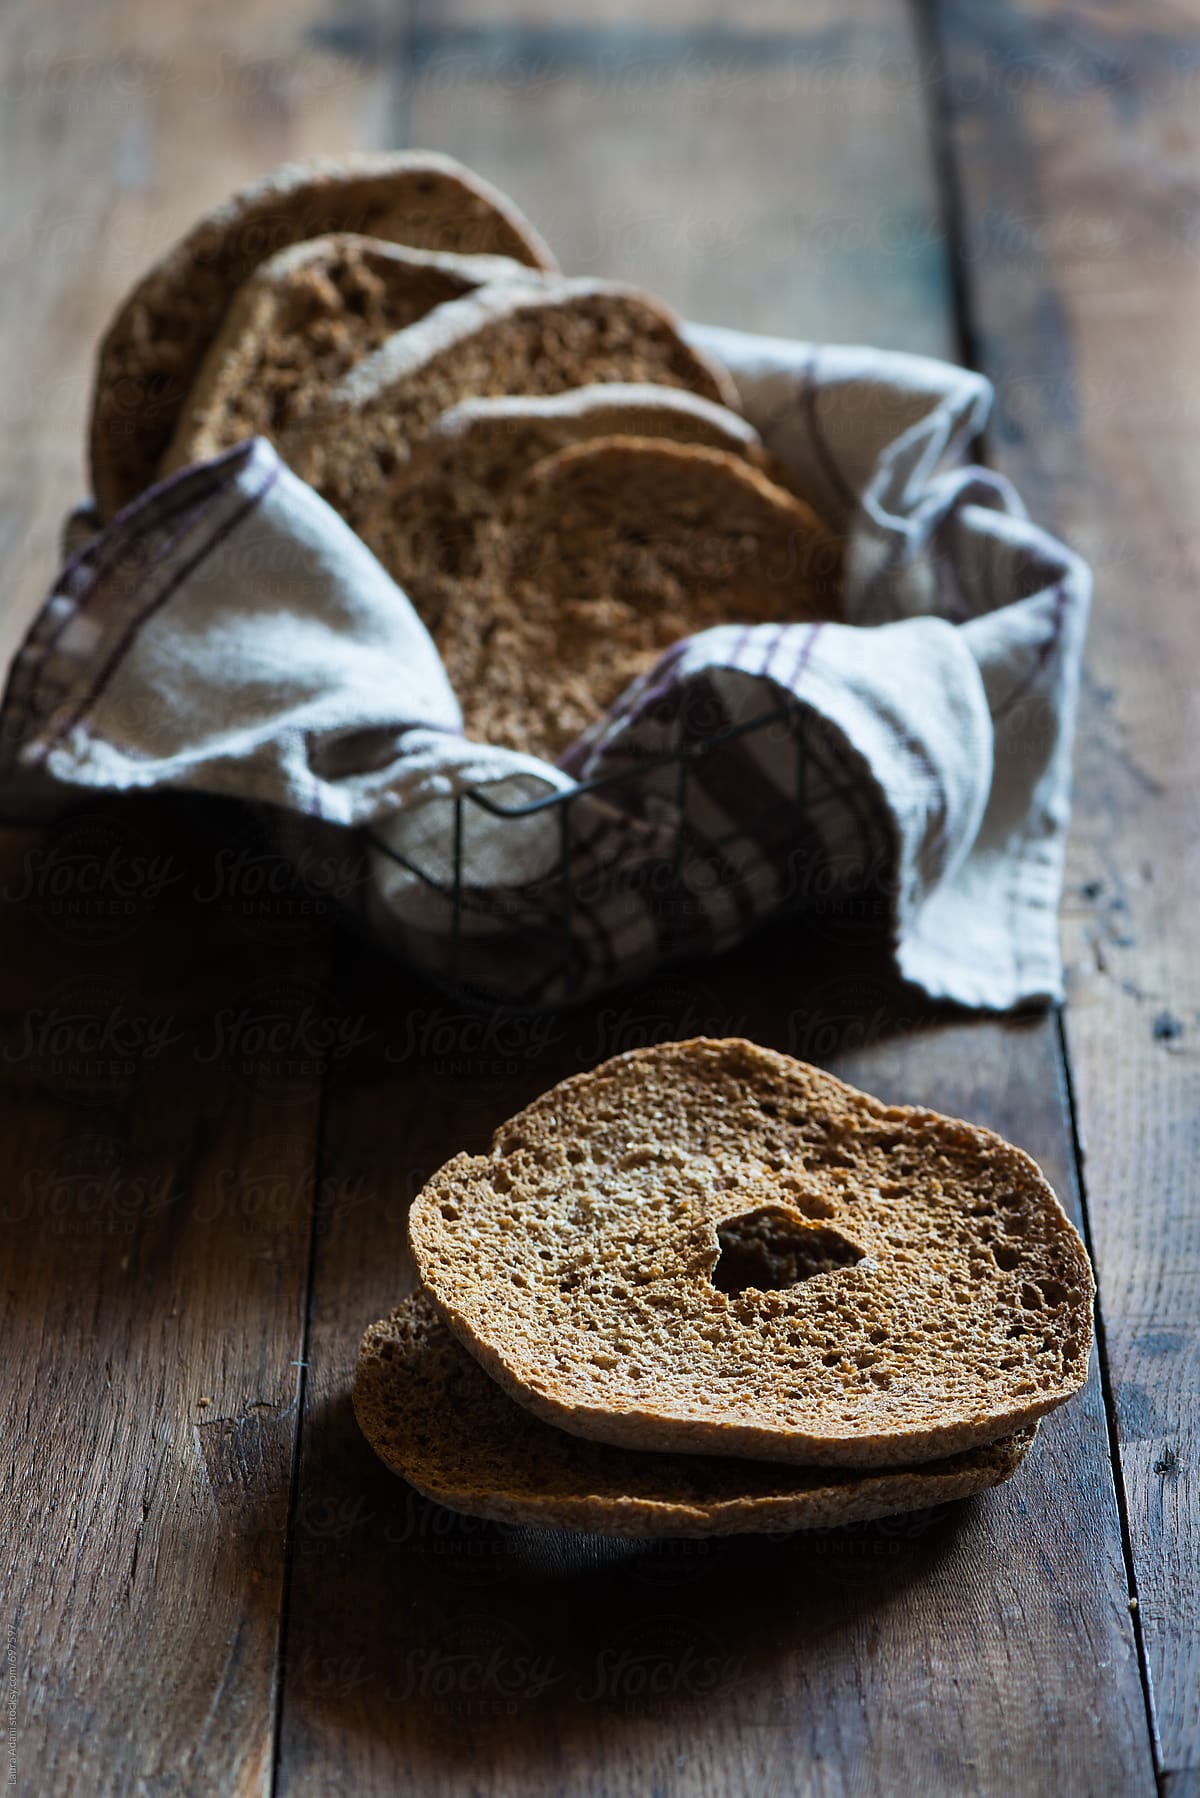 Frisella bread from Matera (Italy)